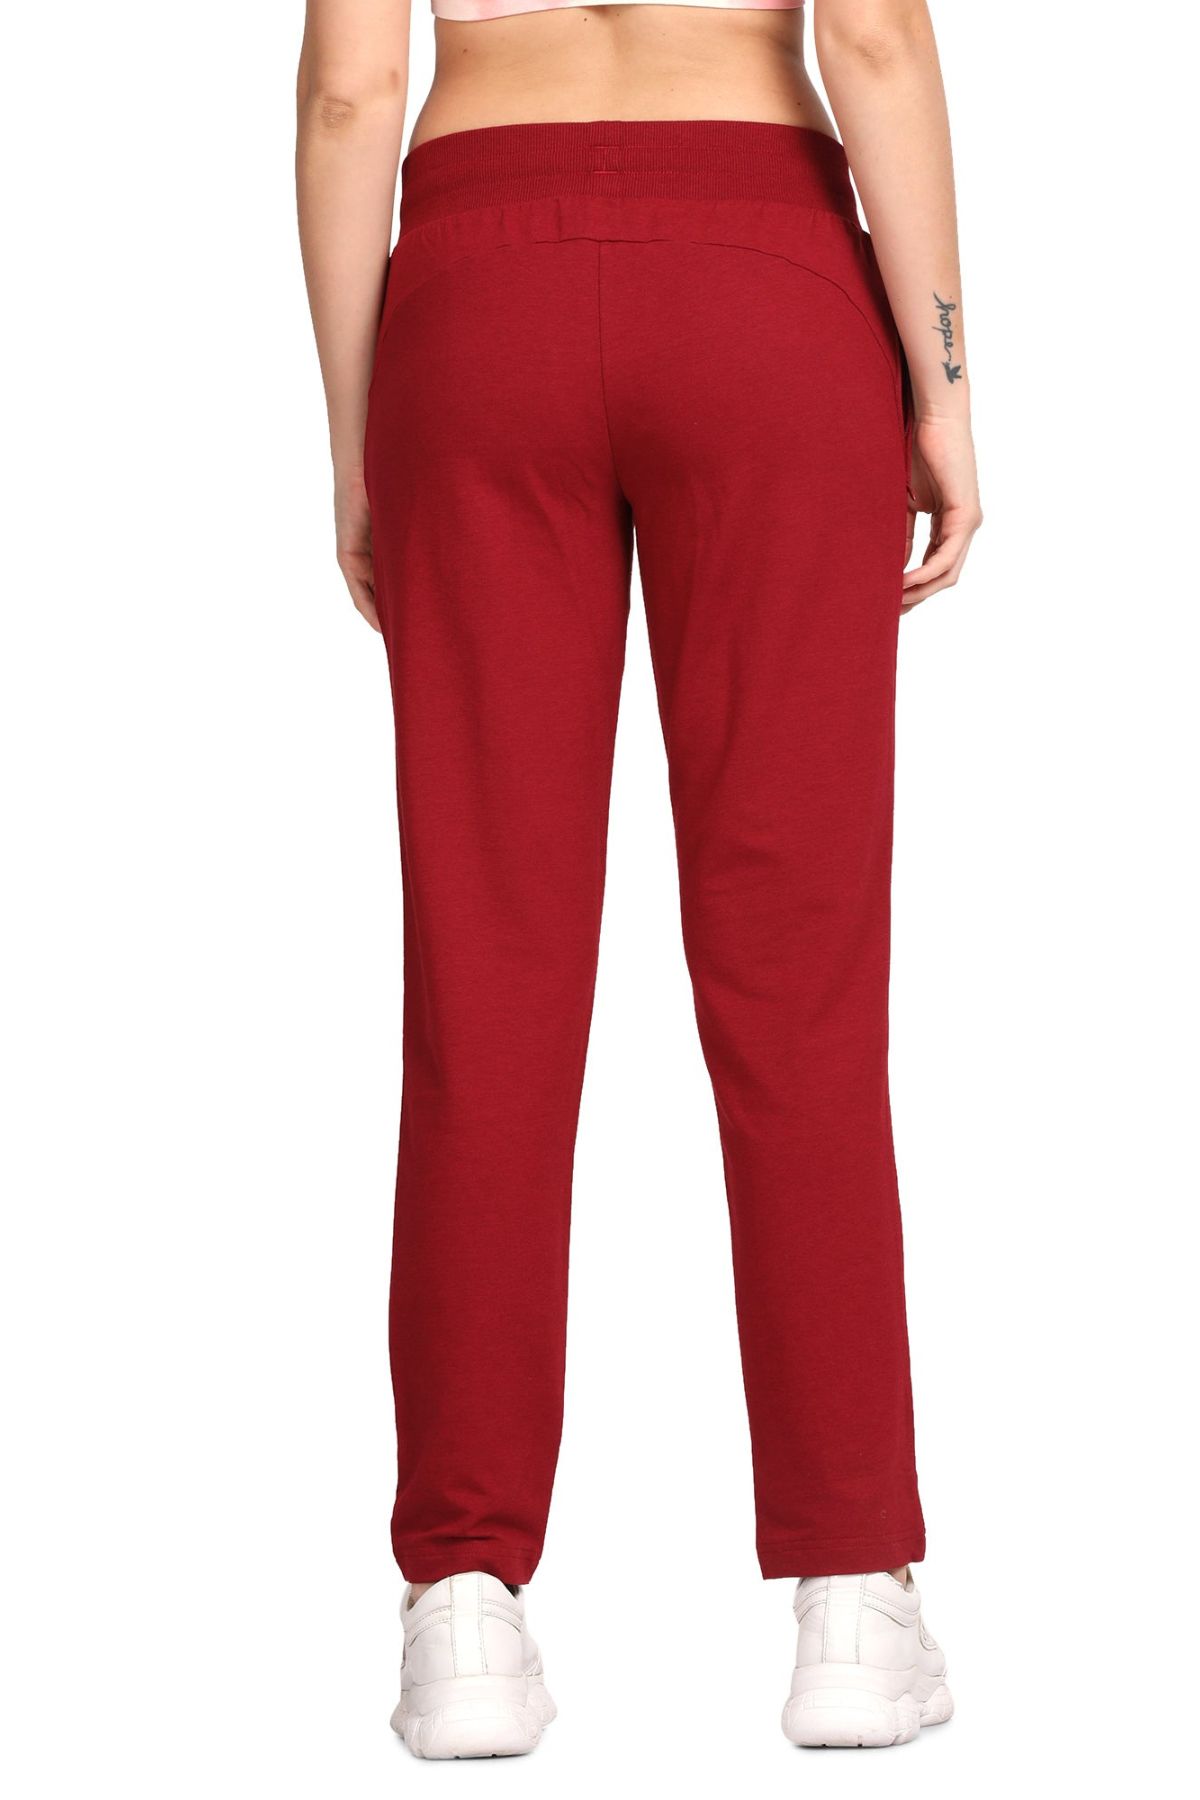 Buy Silvertraq Women's Yogini Stretch pants